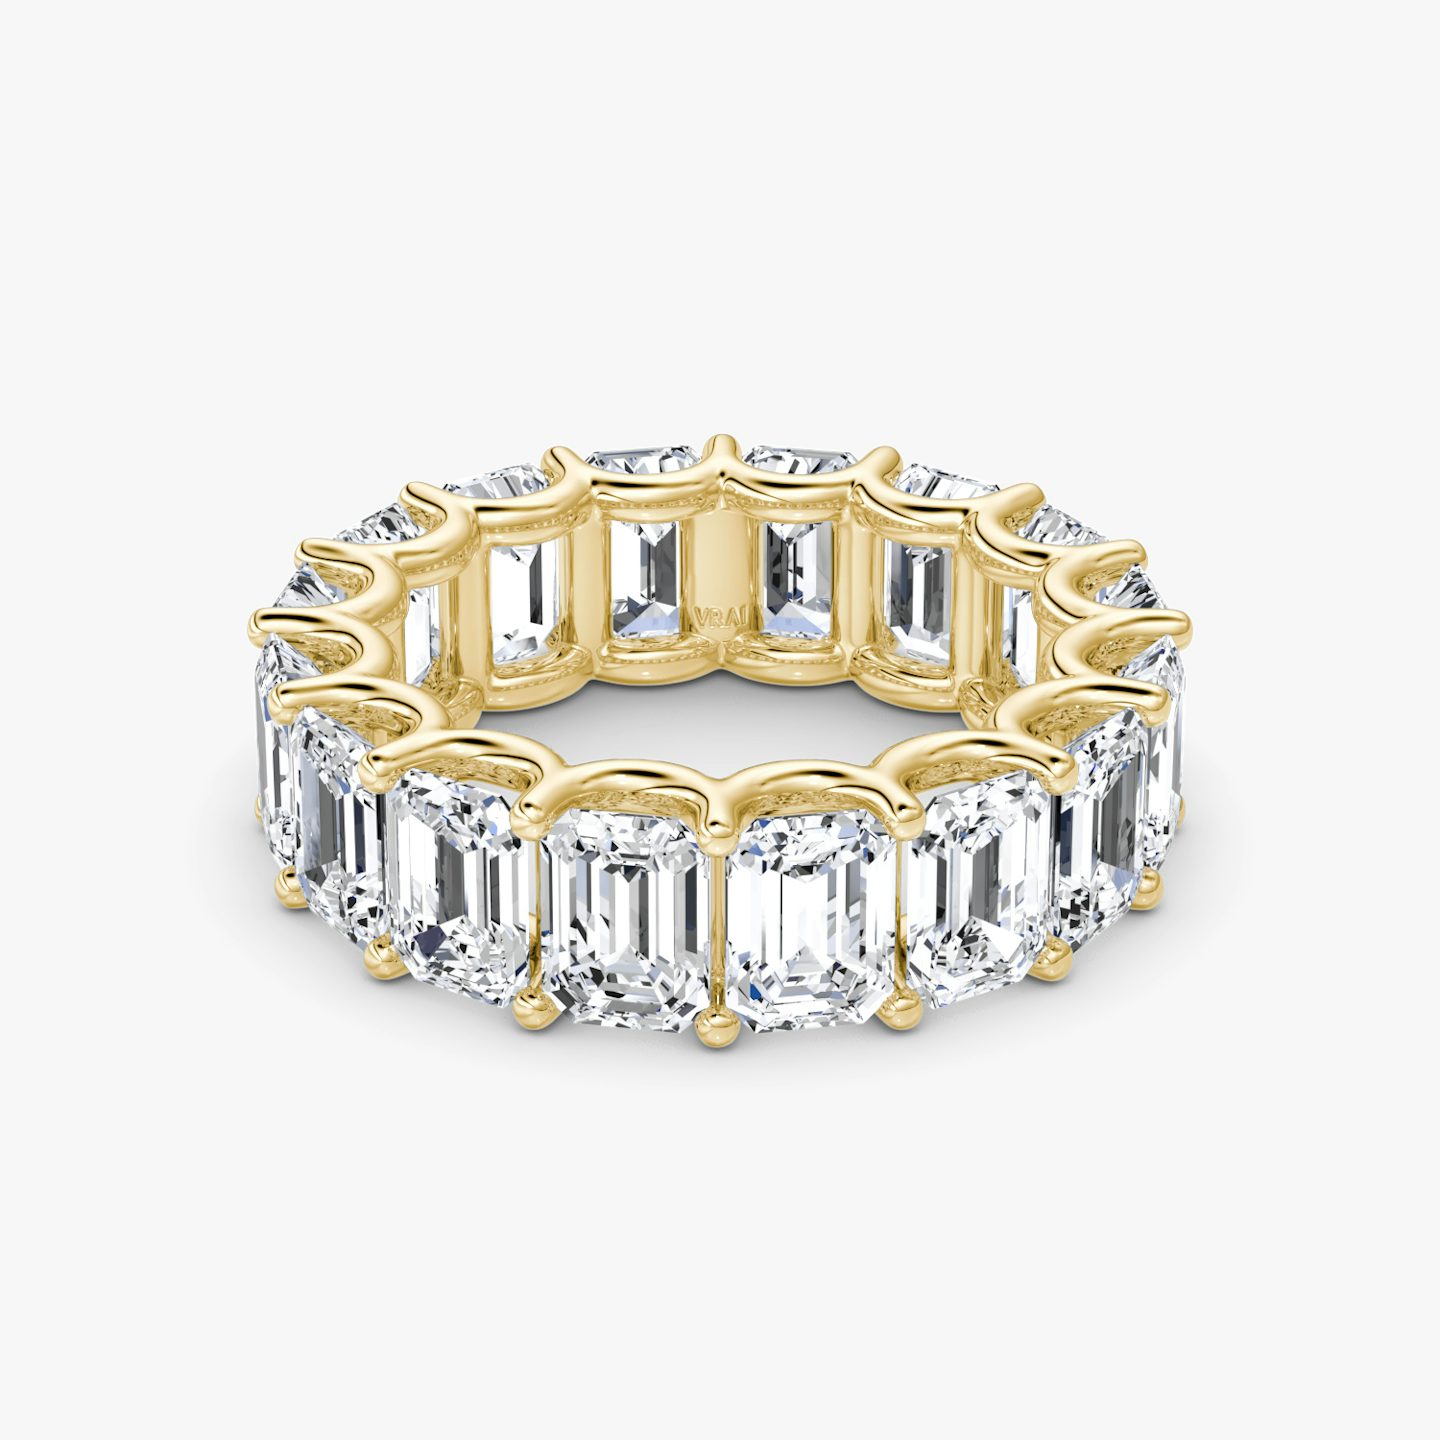 The Eternity Band | Emerald | 18k | 18k Yellow Gold | Band style: Full diamond | Carat weight: 8